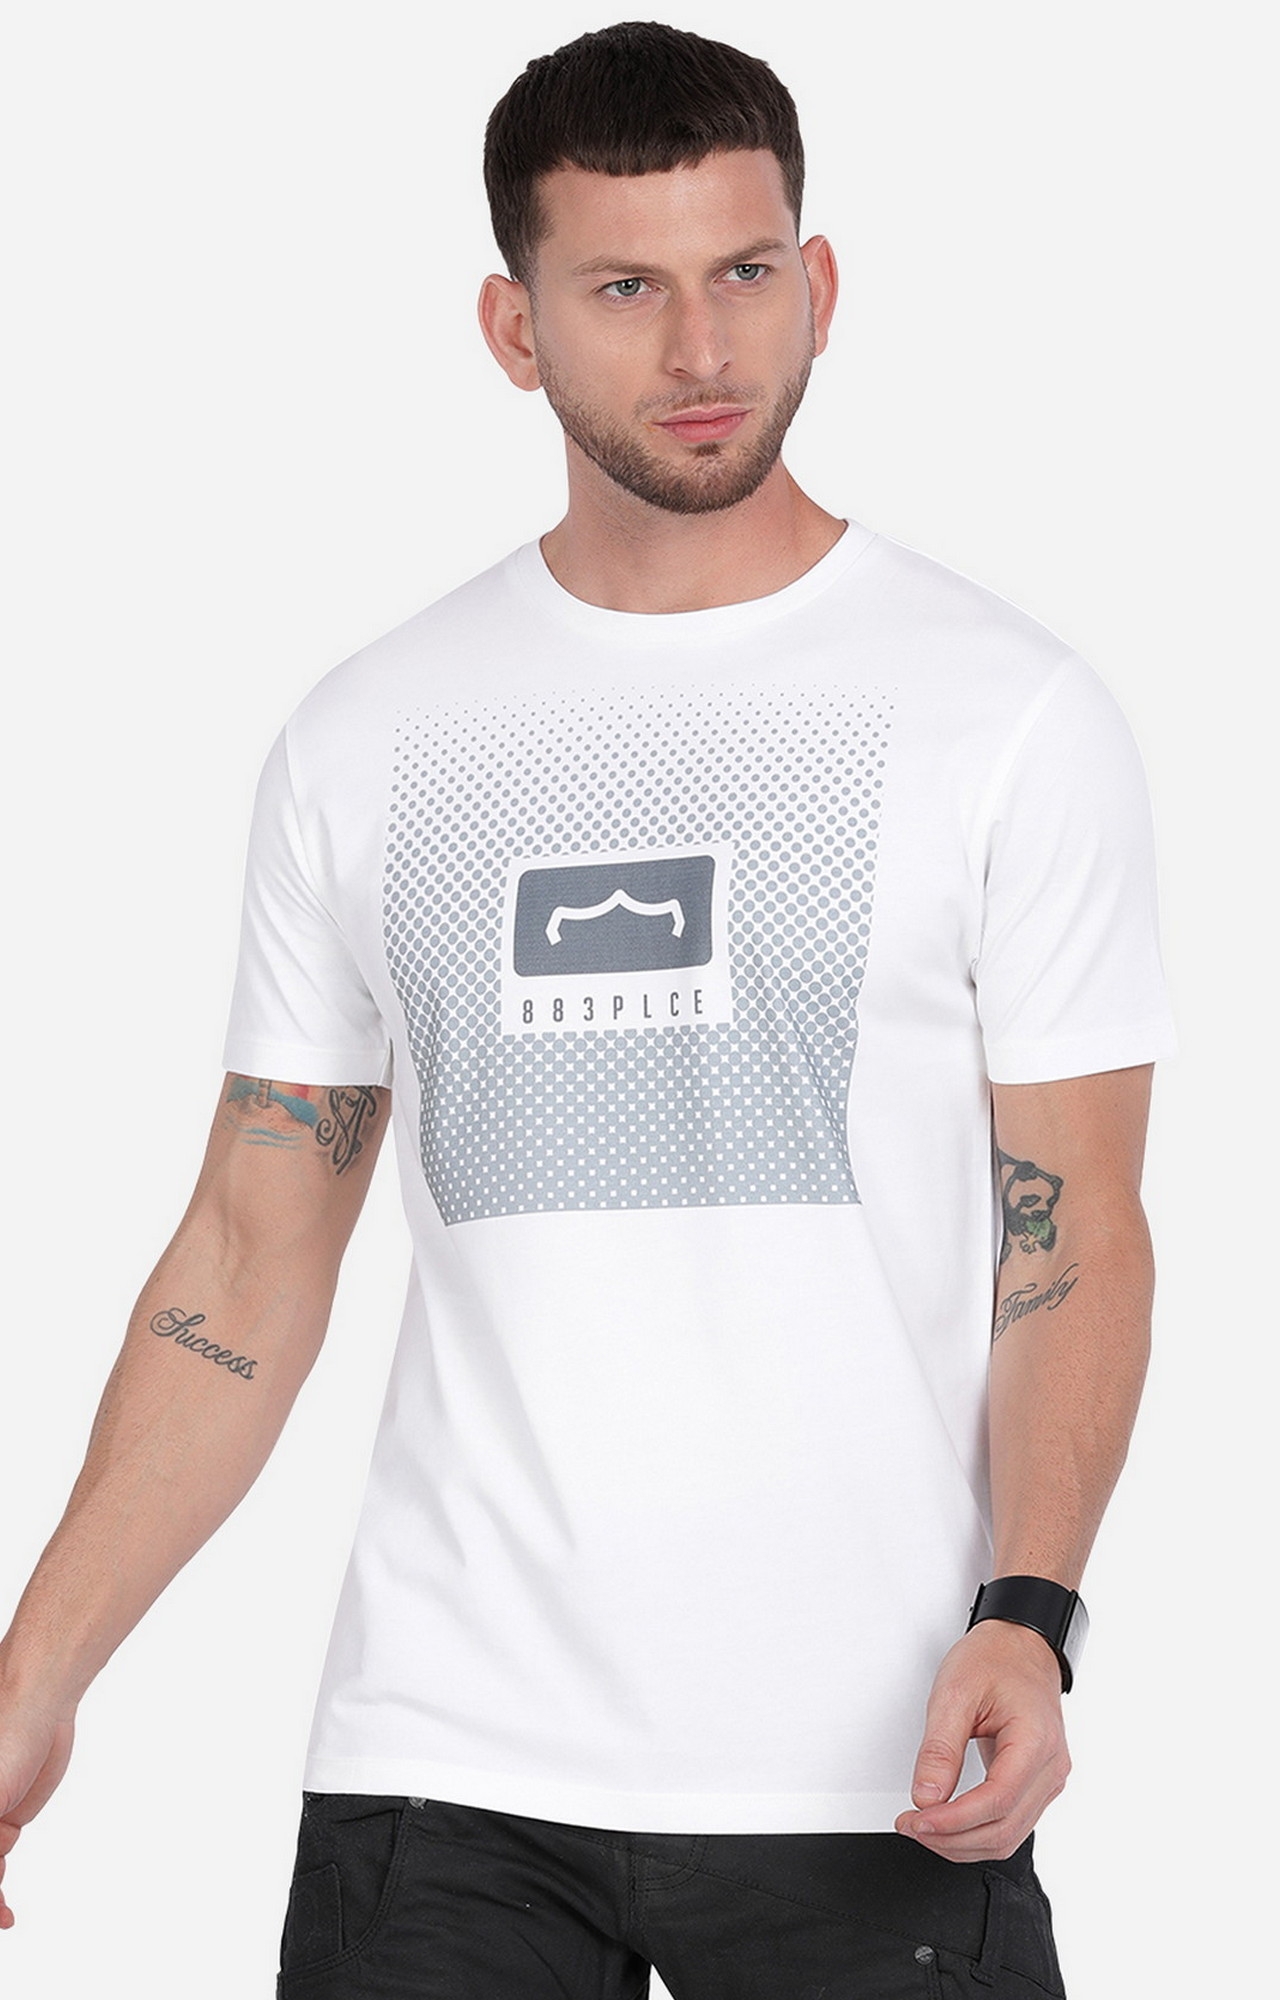 883 Police | Men's White Cotton Graphics T-Shirt 2